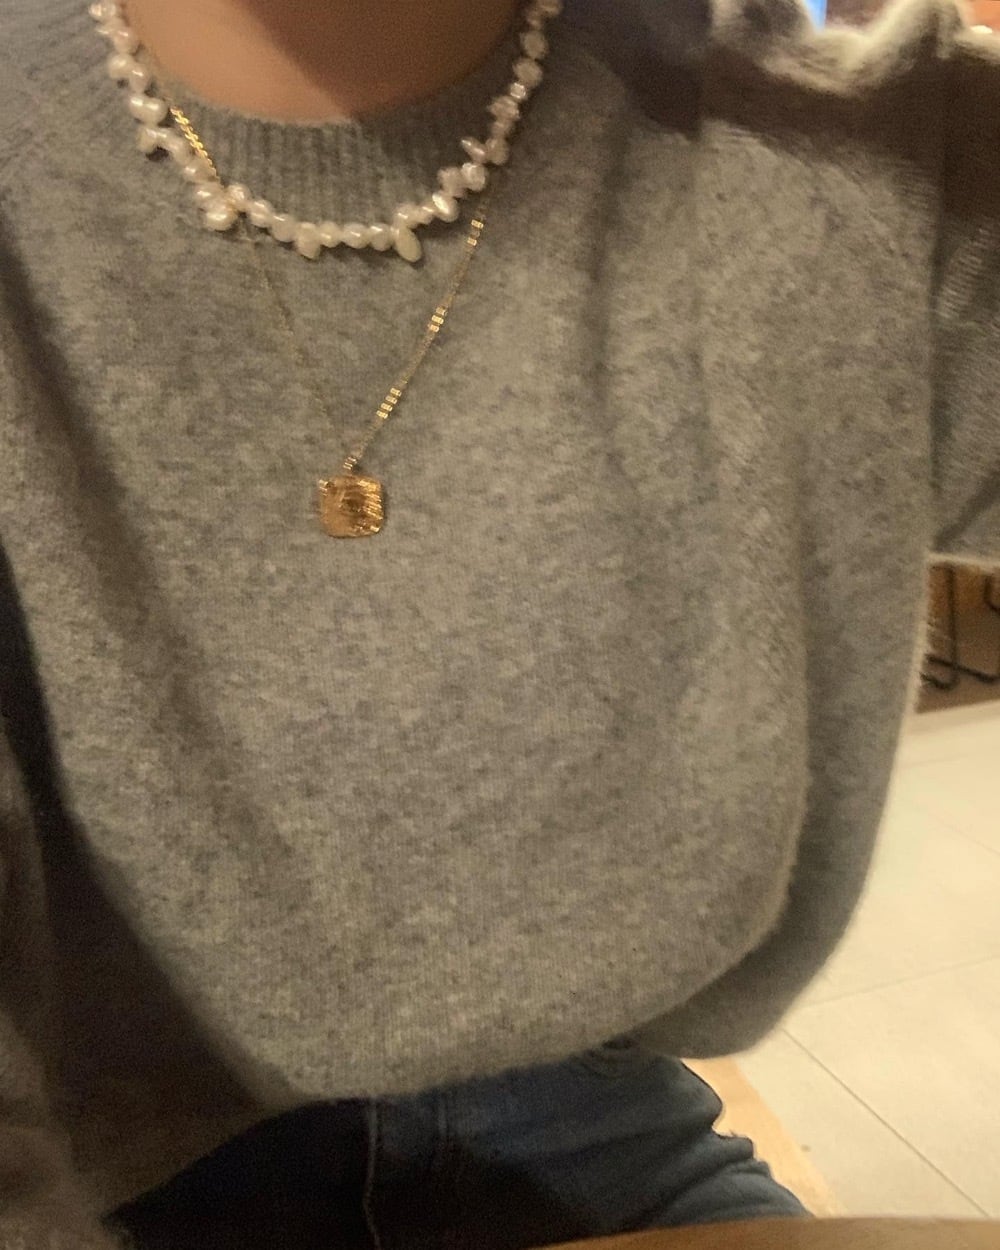 S925 Big Pearl necklace (N171) | onesea